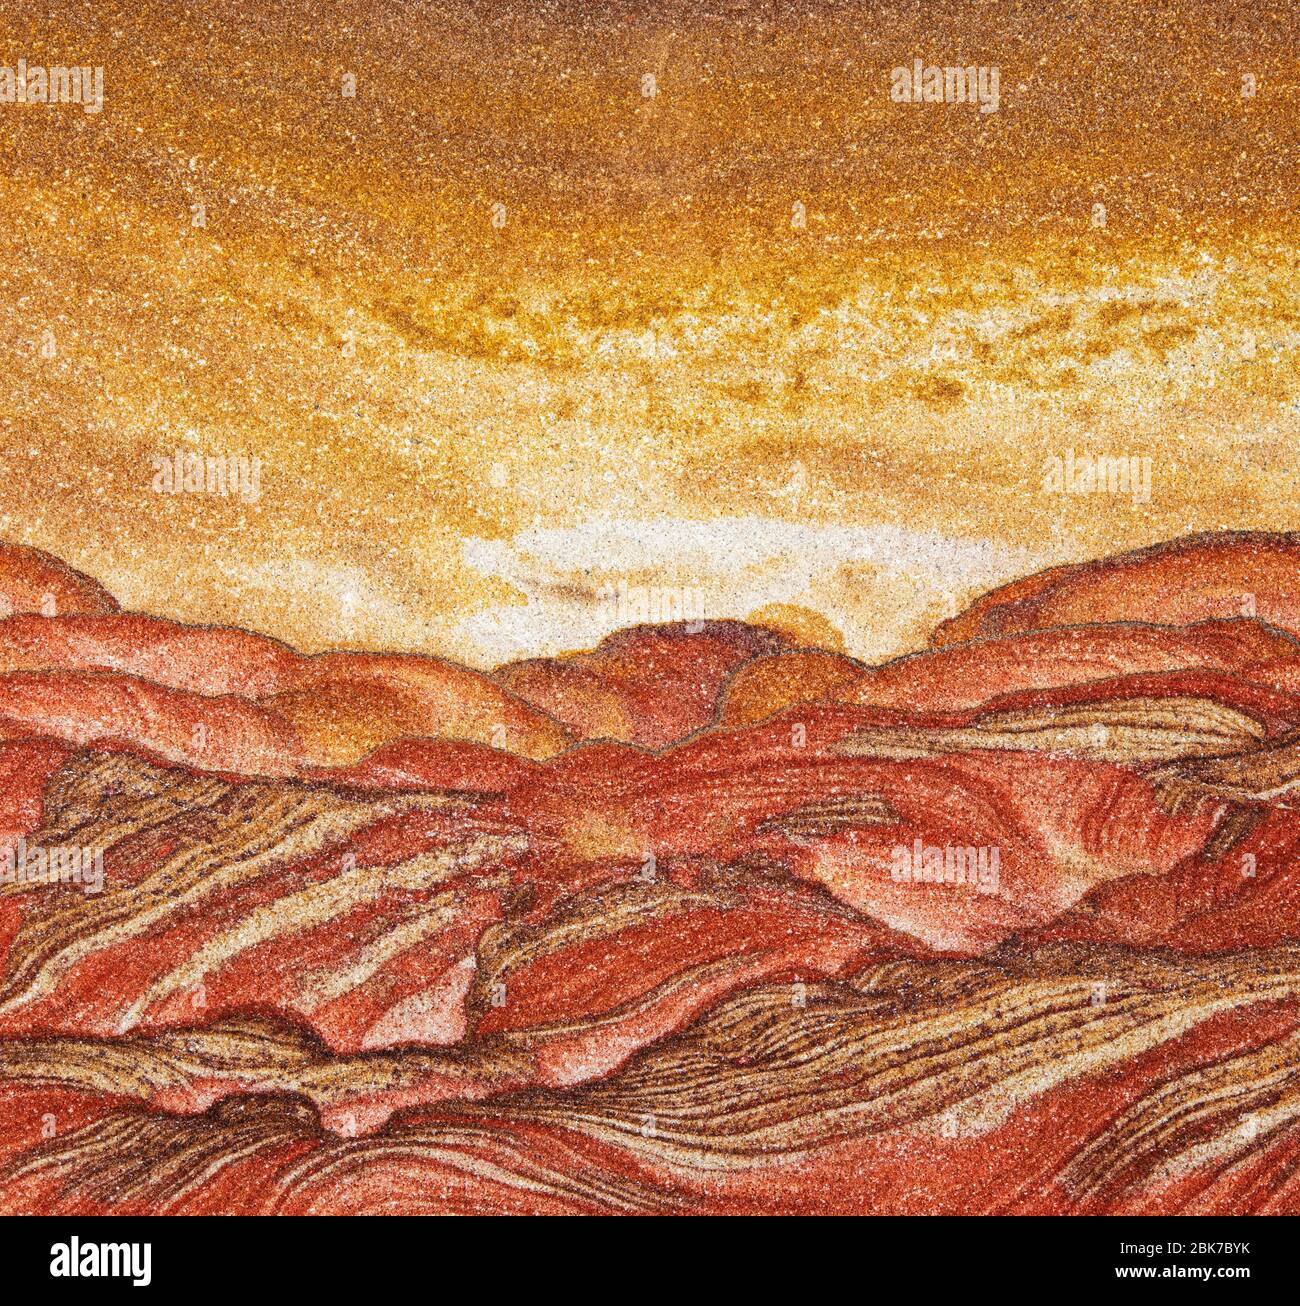 The rising sun depicted by sandstone deposits, Kanab, Utah, USA Stock Photo